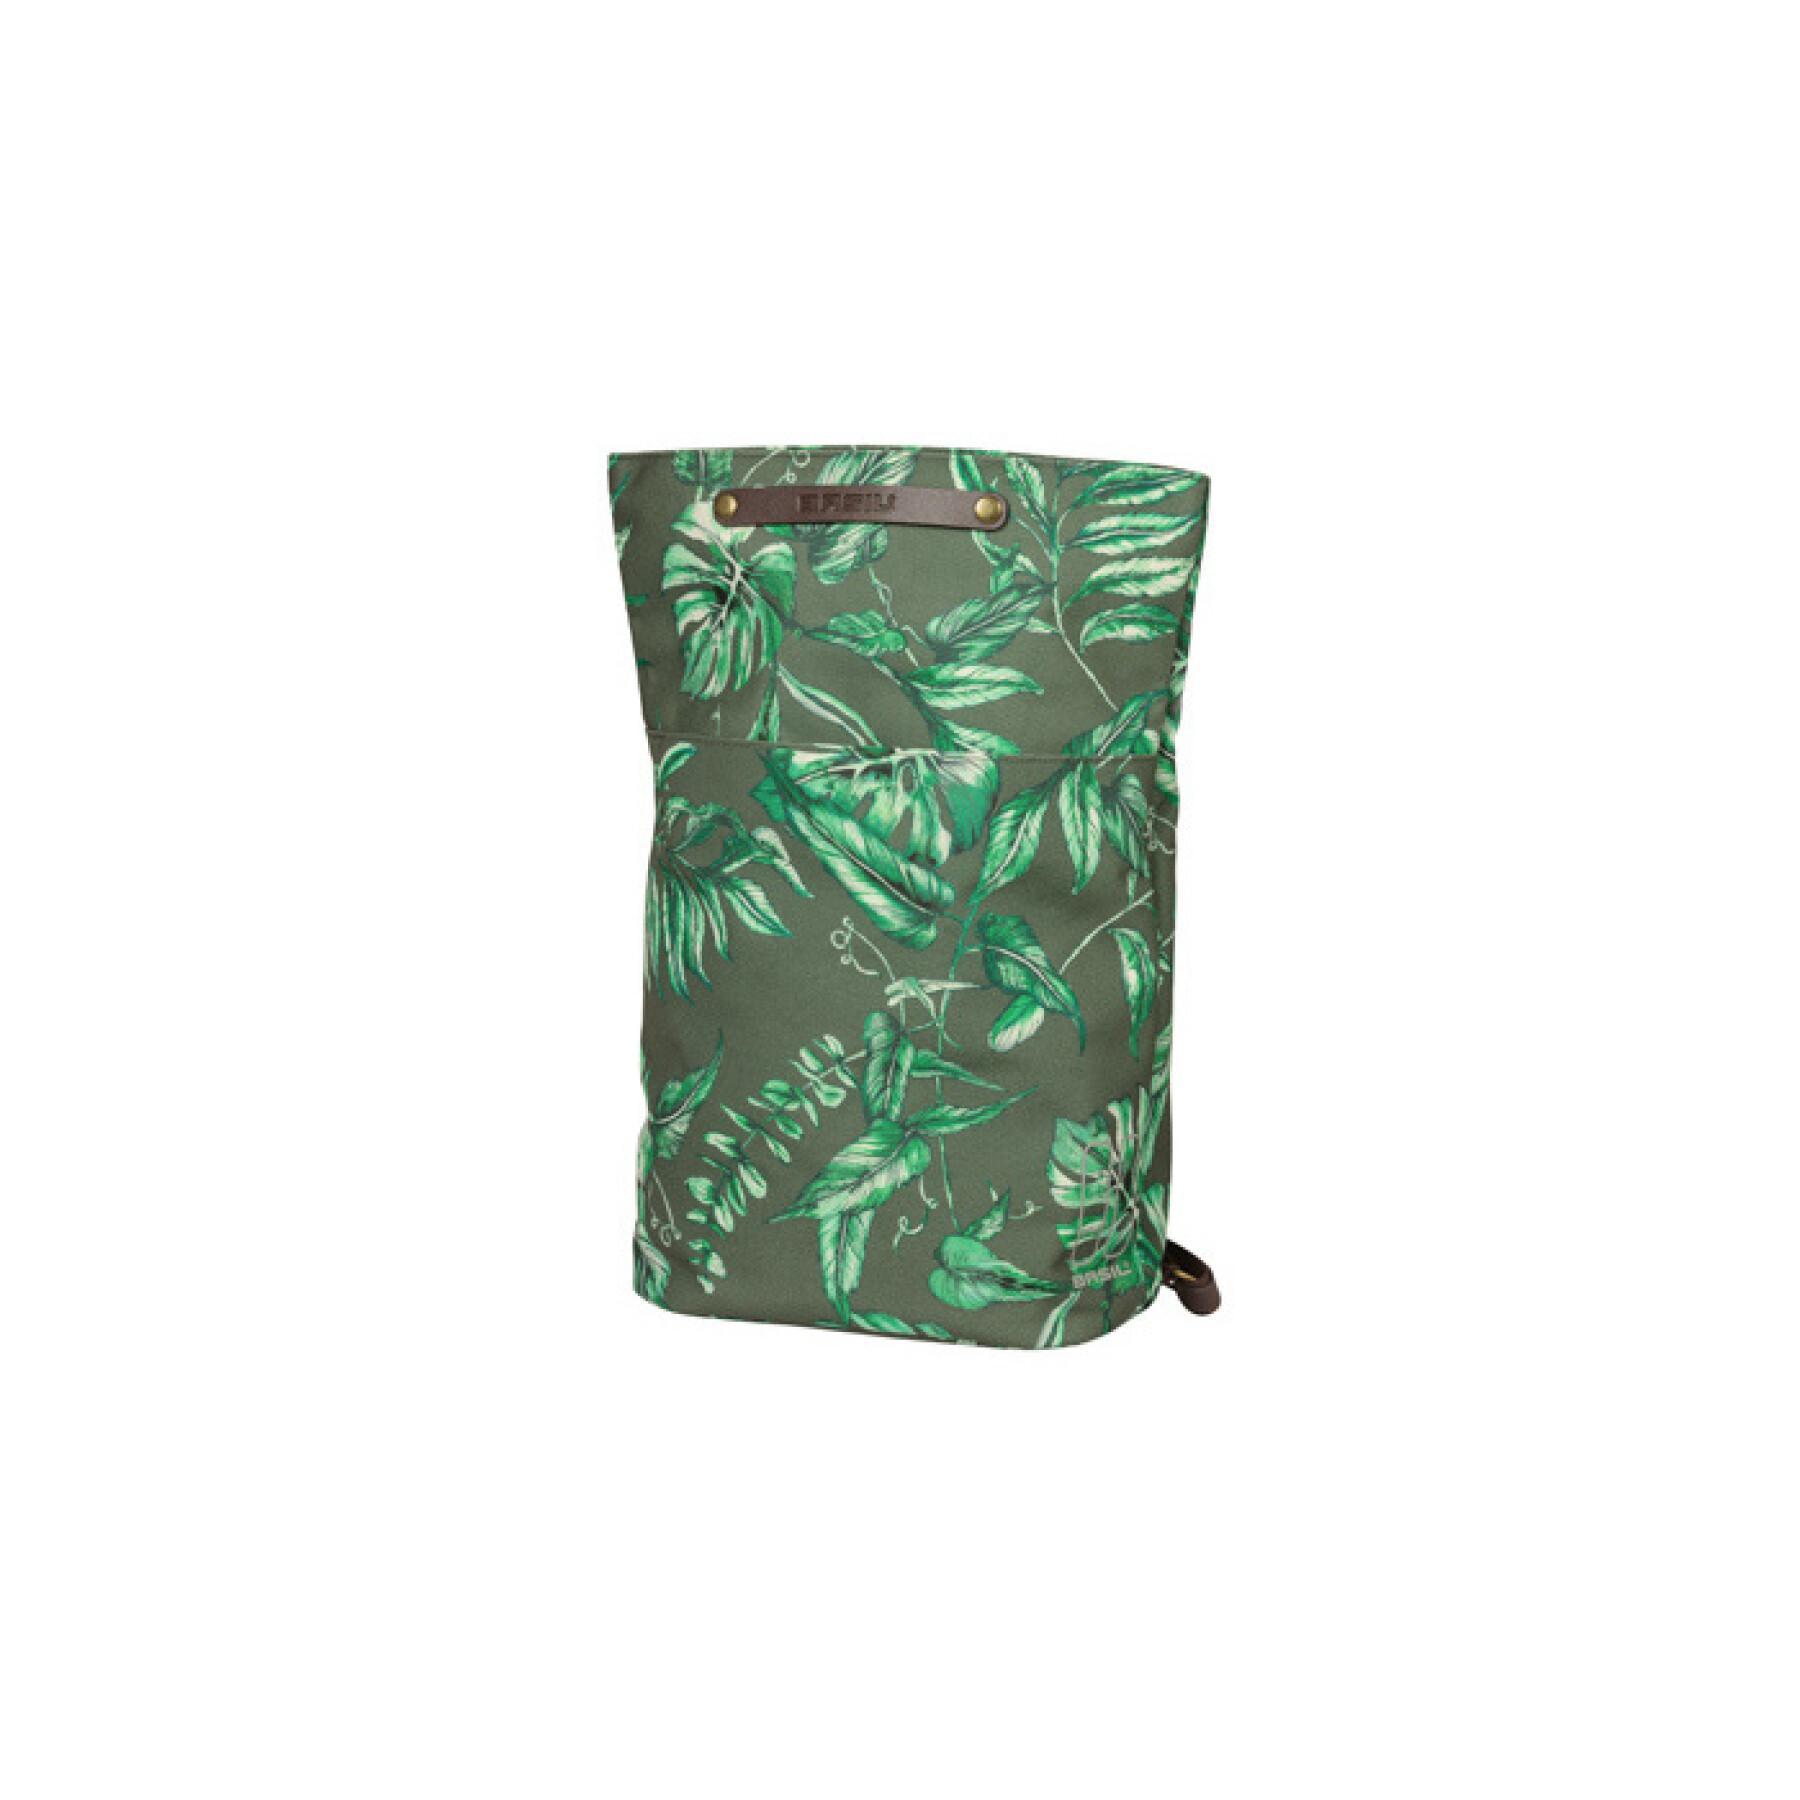 Reflective bag Basil ever-green polyester 14-19L